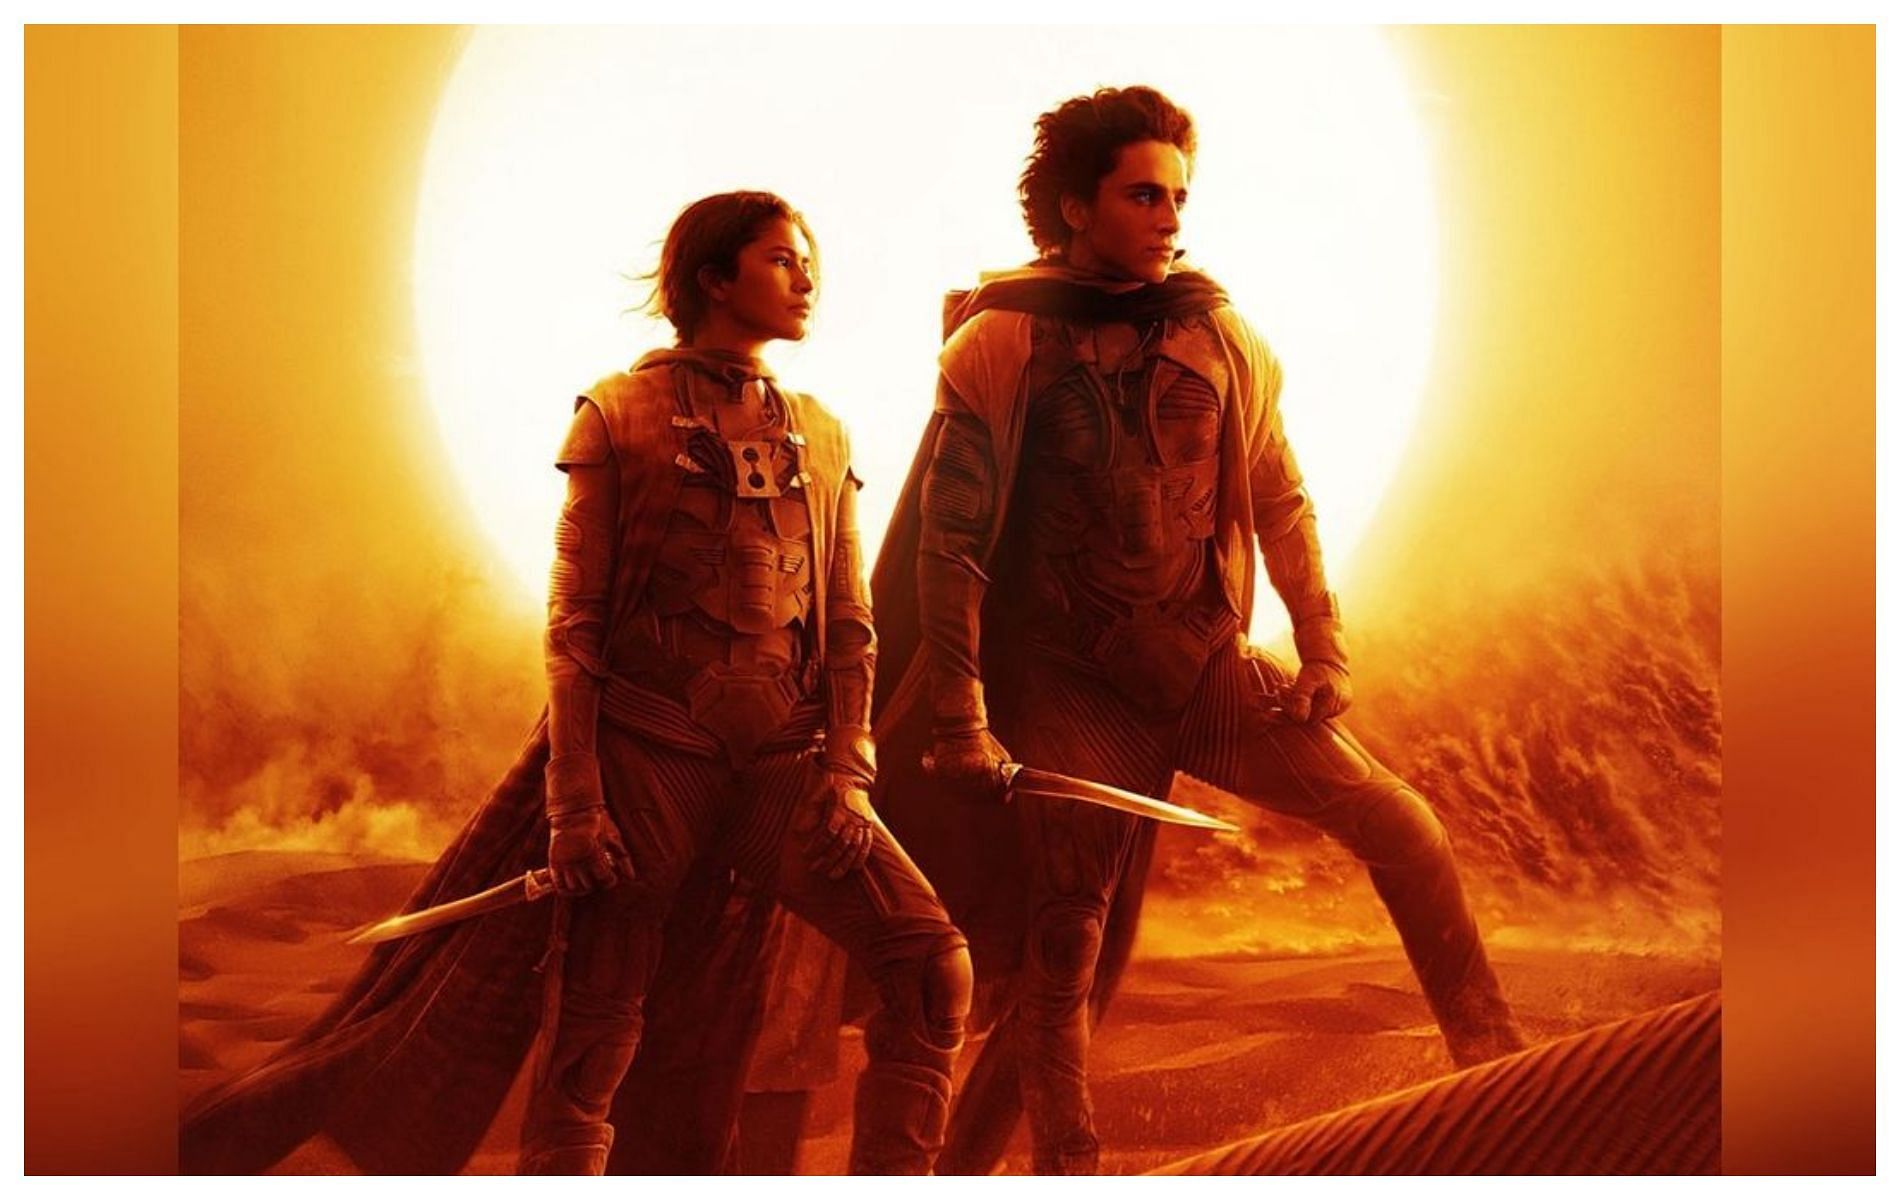 Dune 2 is finally here. (Image via Dunemovie, Instagram)